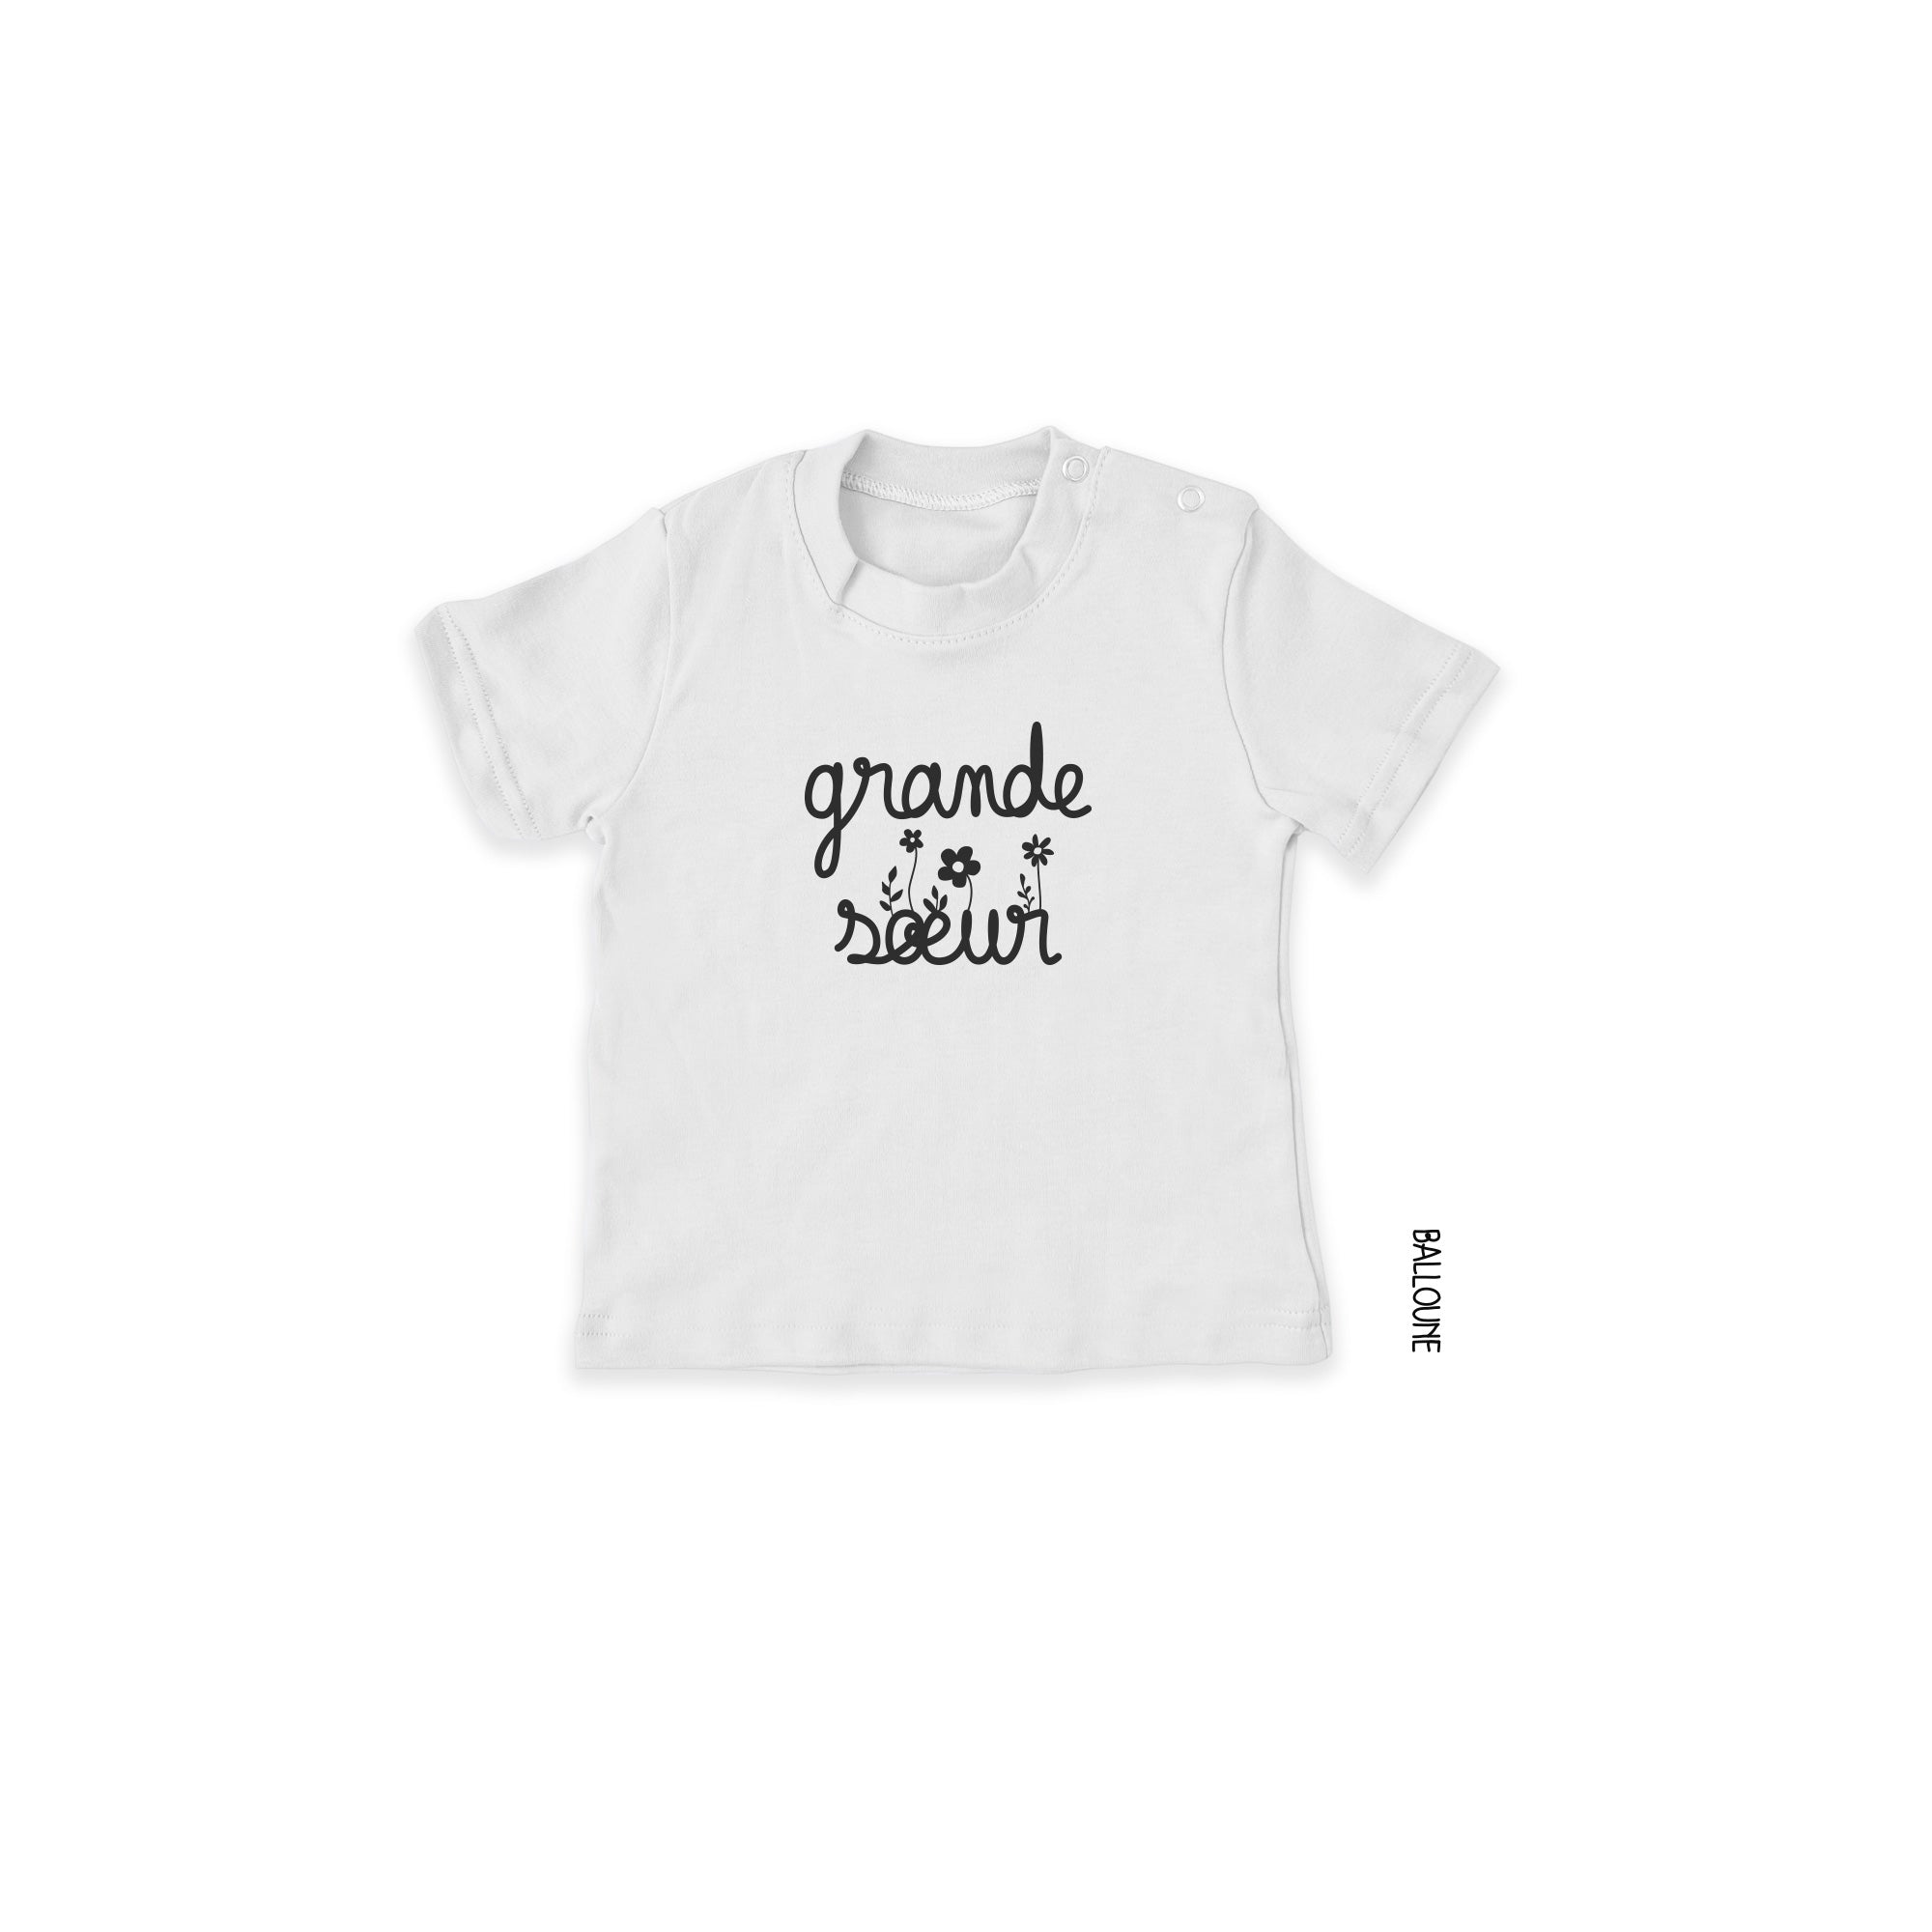 T-shirt "grande sœur" design FLEURI